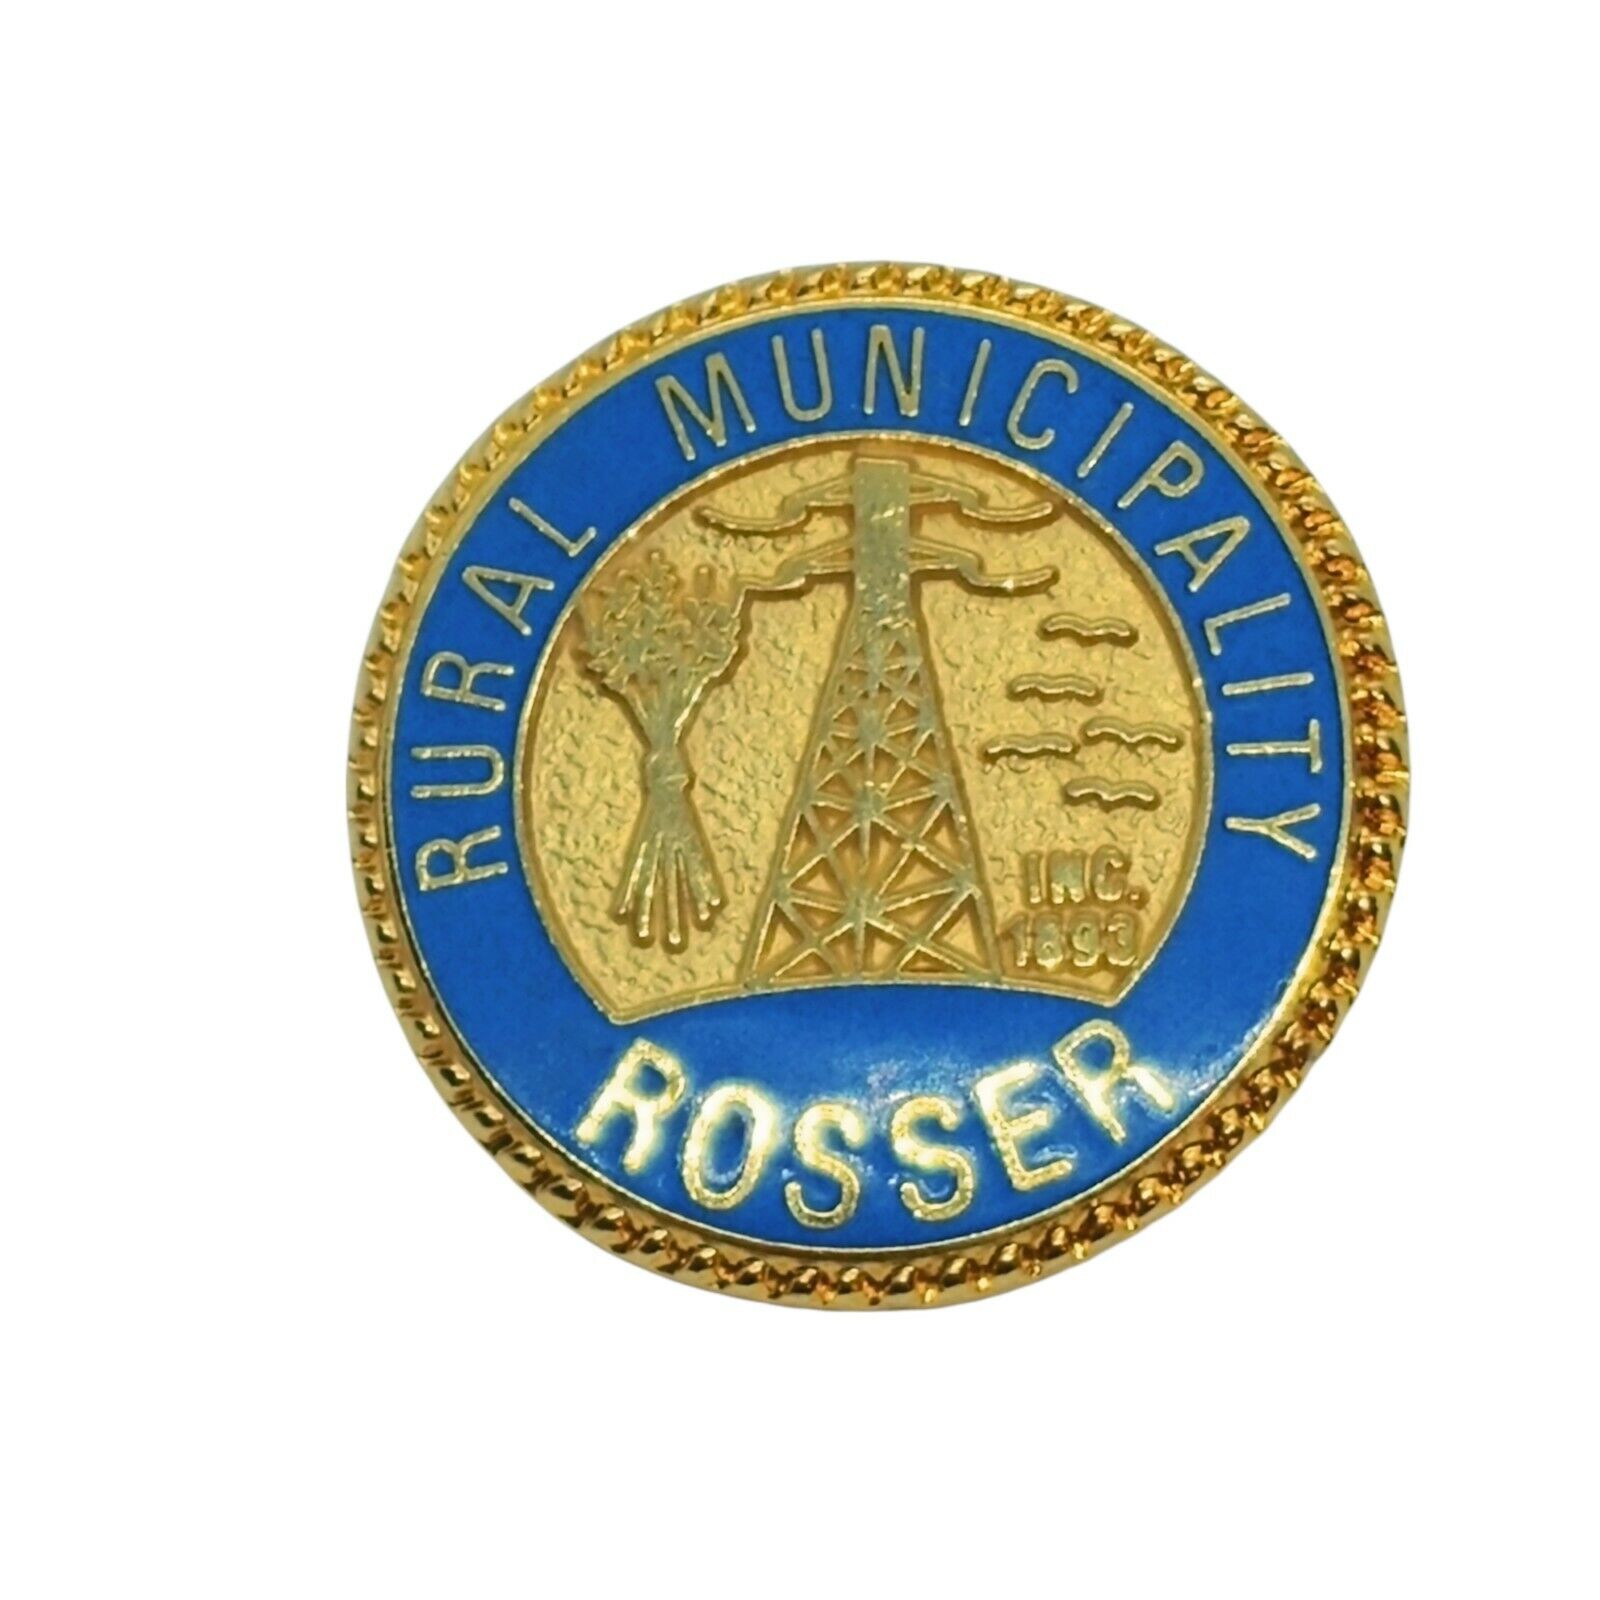 RURAL MUNICIPALITY ROSSER Lapel Pin - Manitoba Canada 